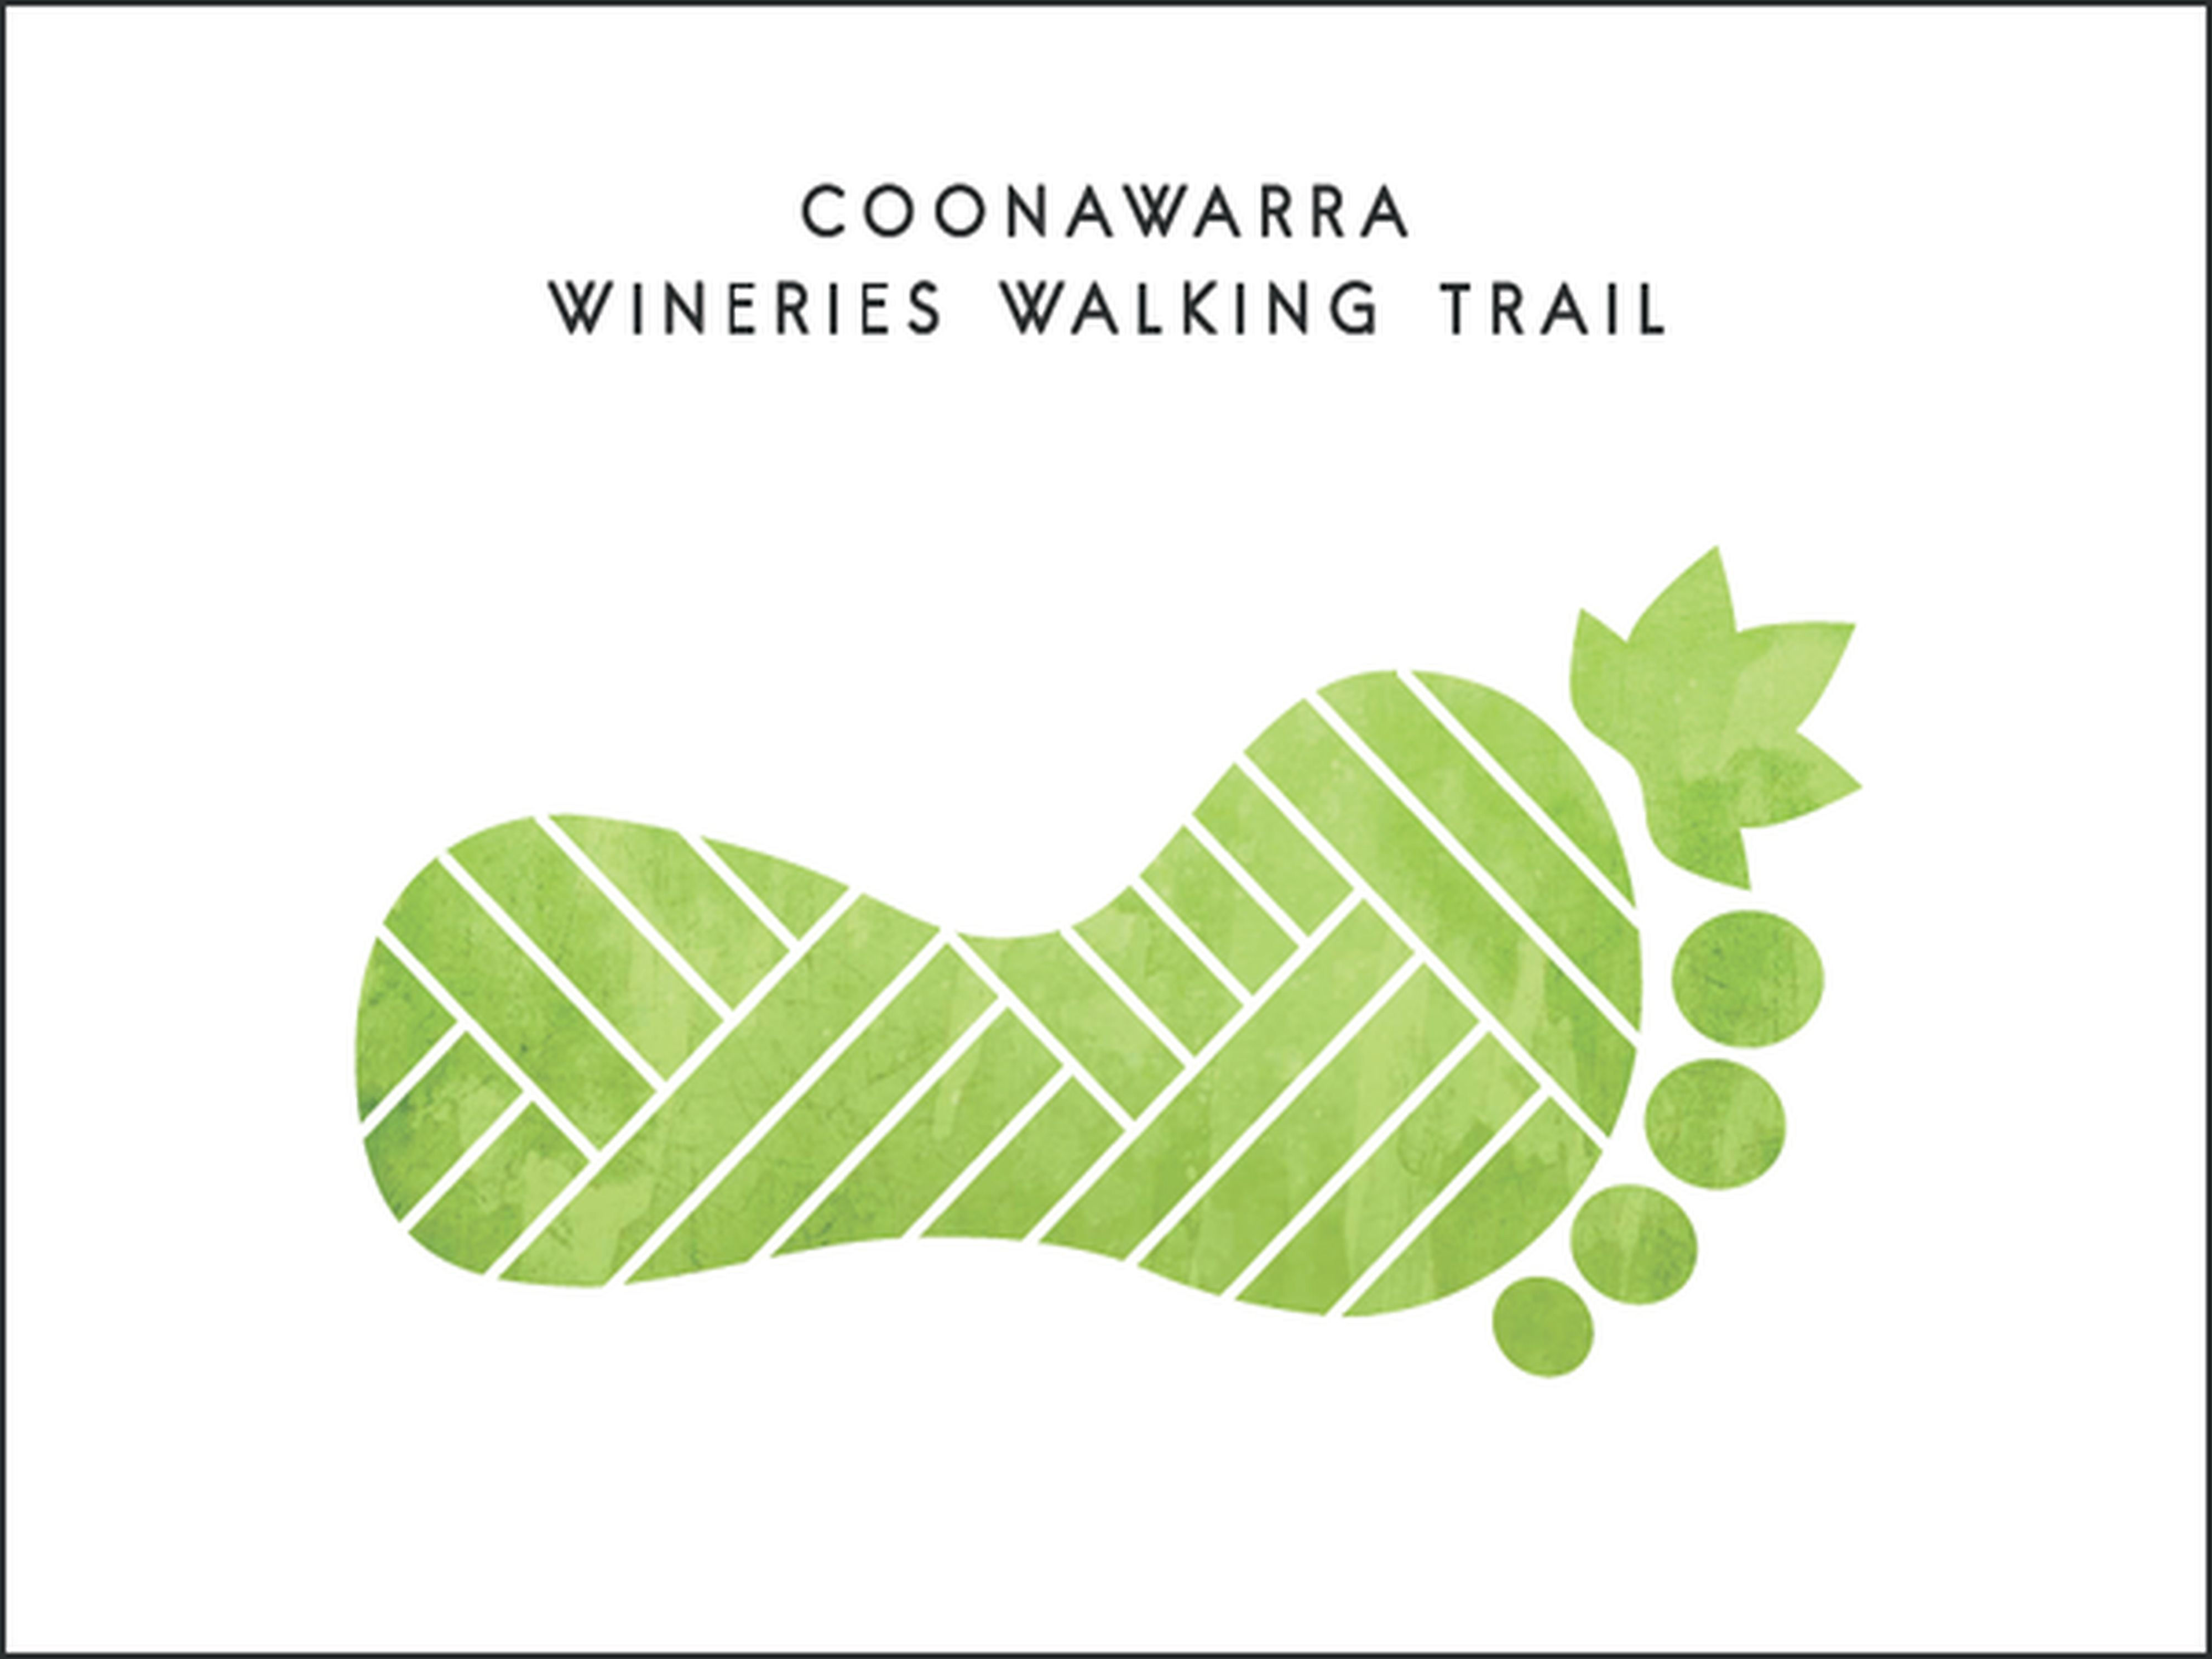 Wineries walking trail logo